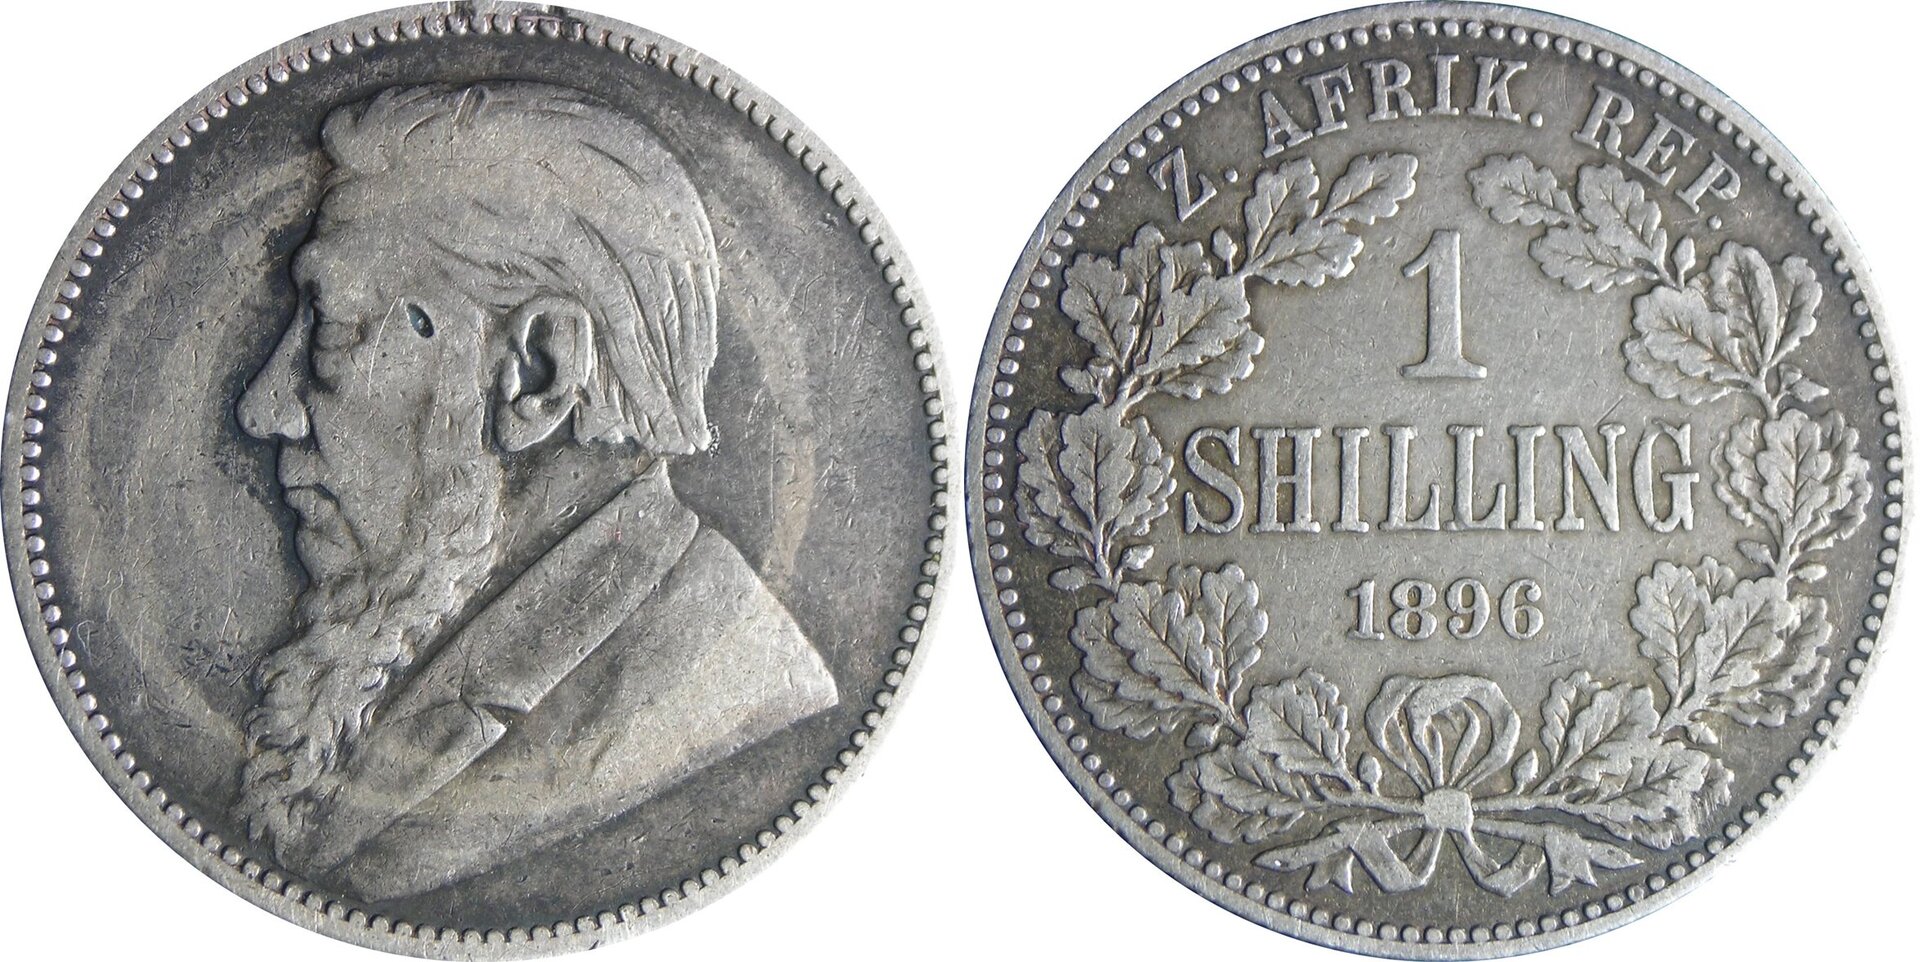 1896 ZAR shilling.jpg